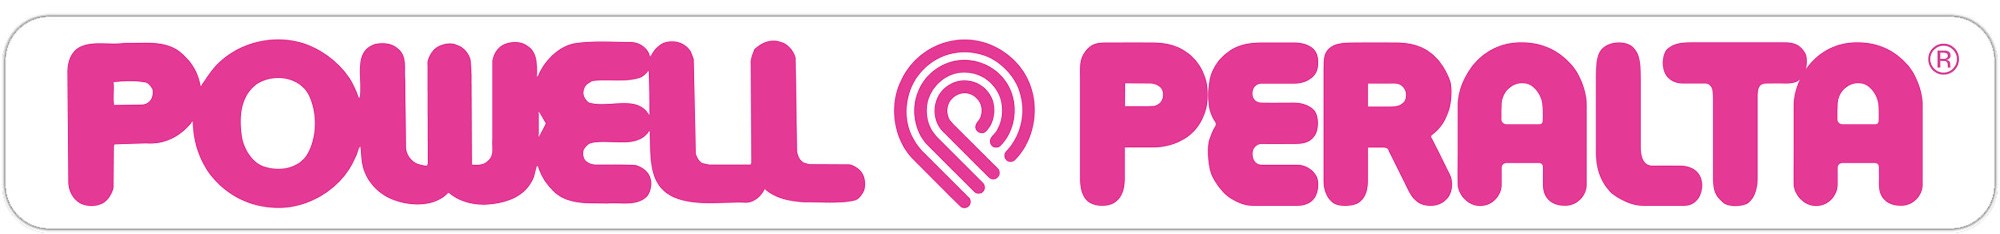 Powell Peralta Strip 4" Sticker Pink